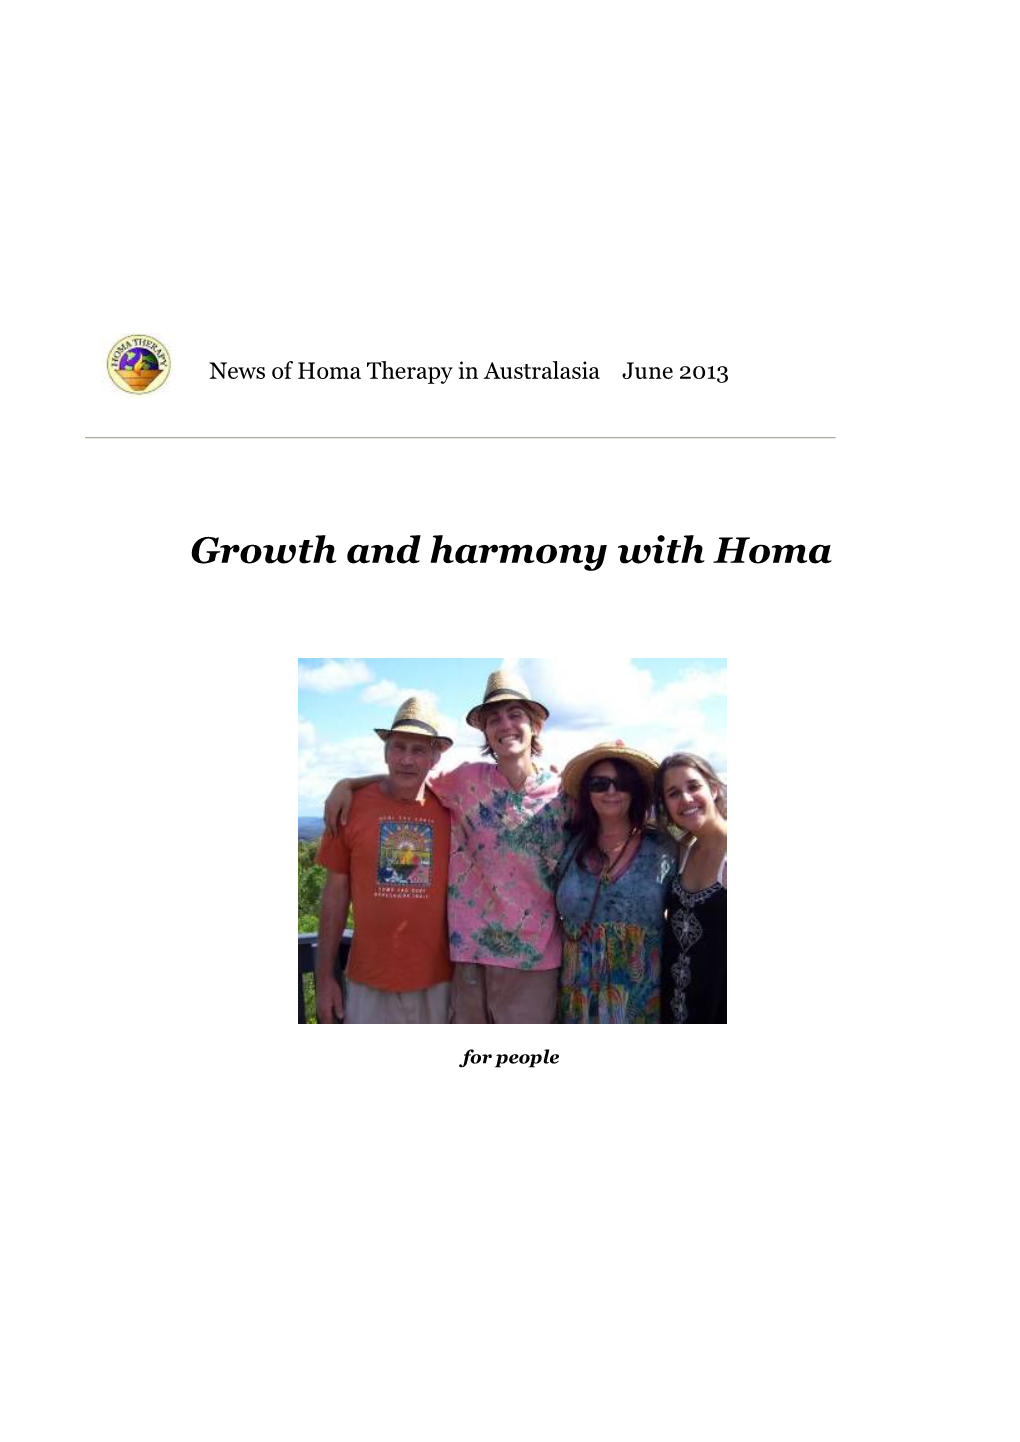 Growth and Harmony with Homa